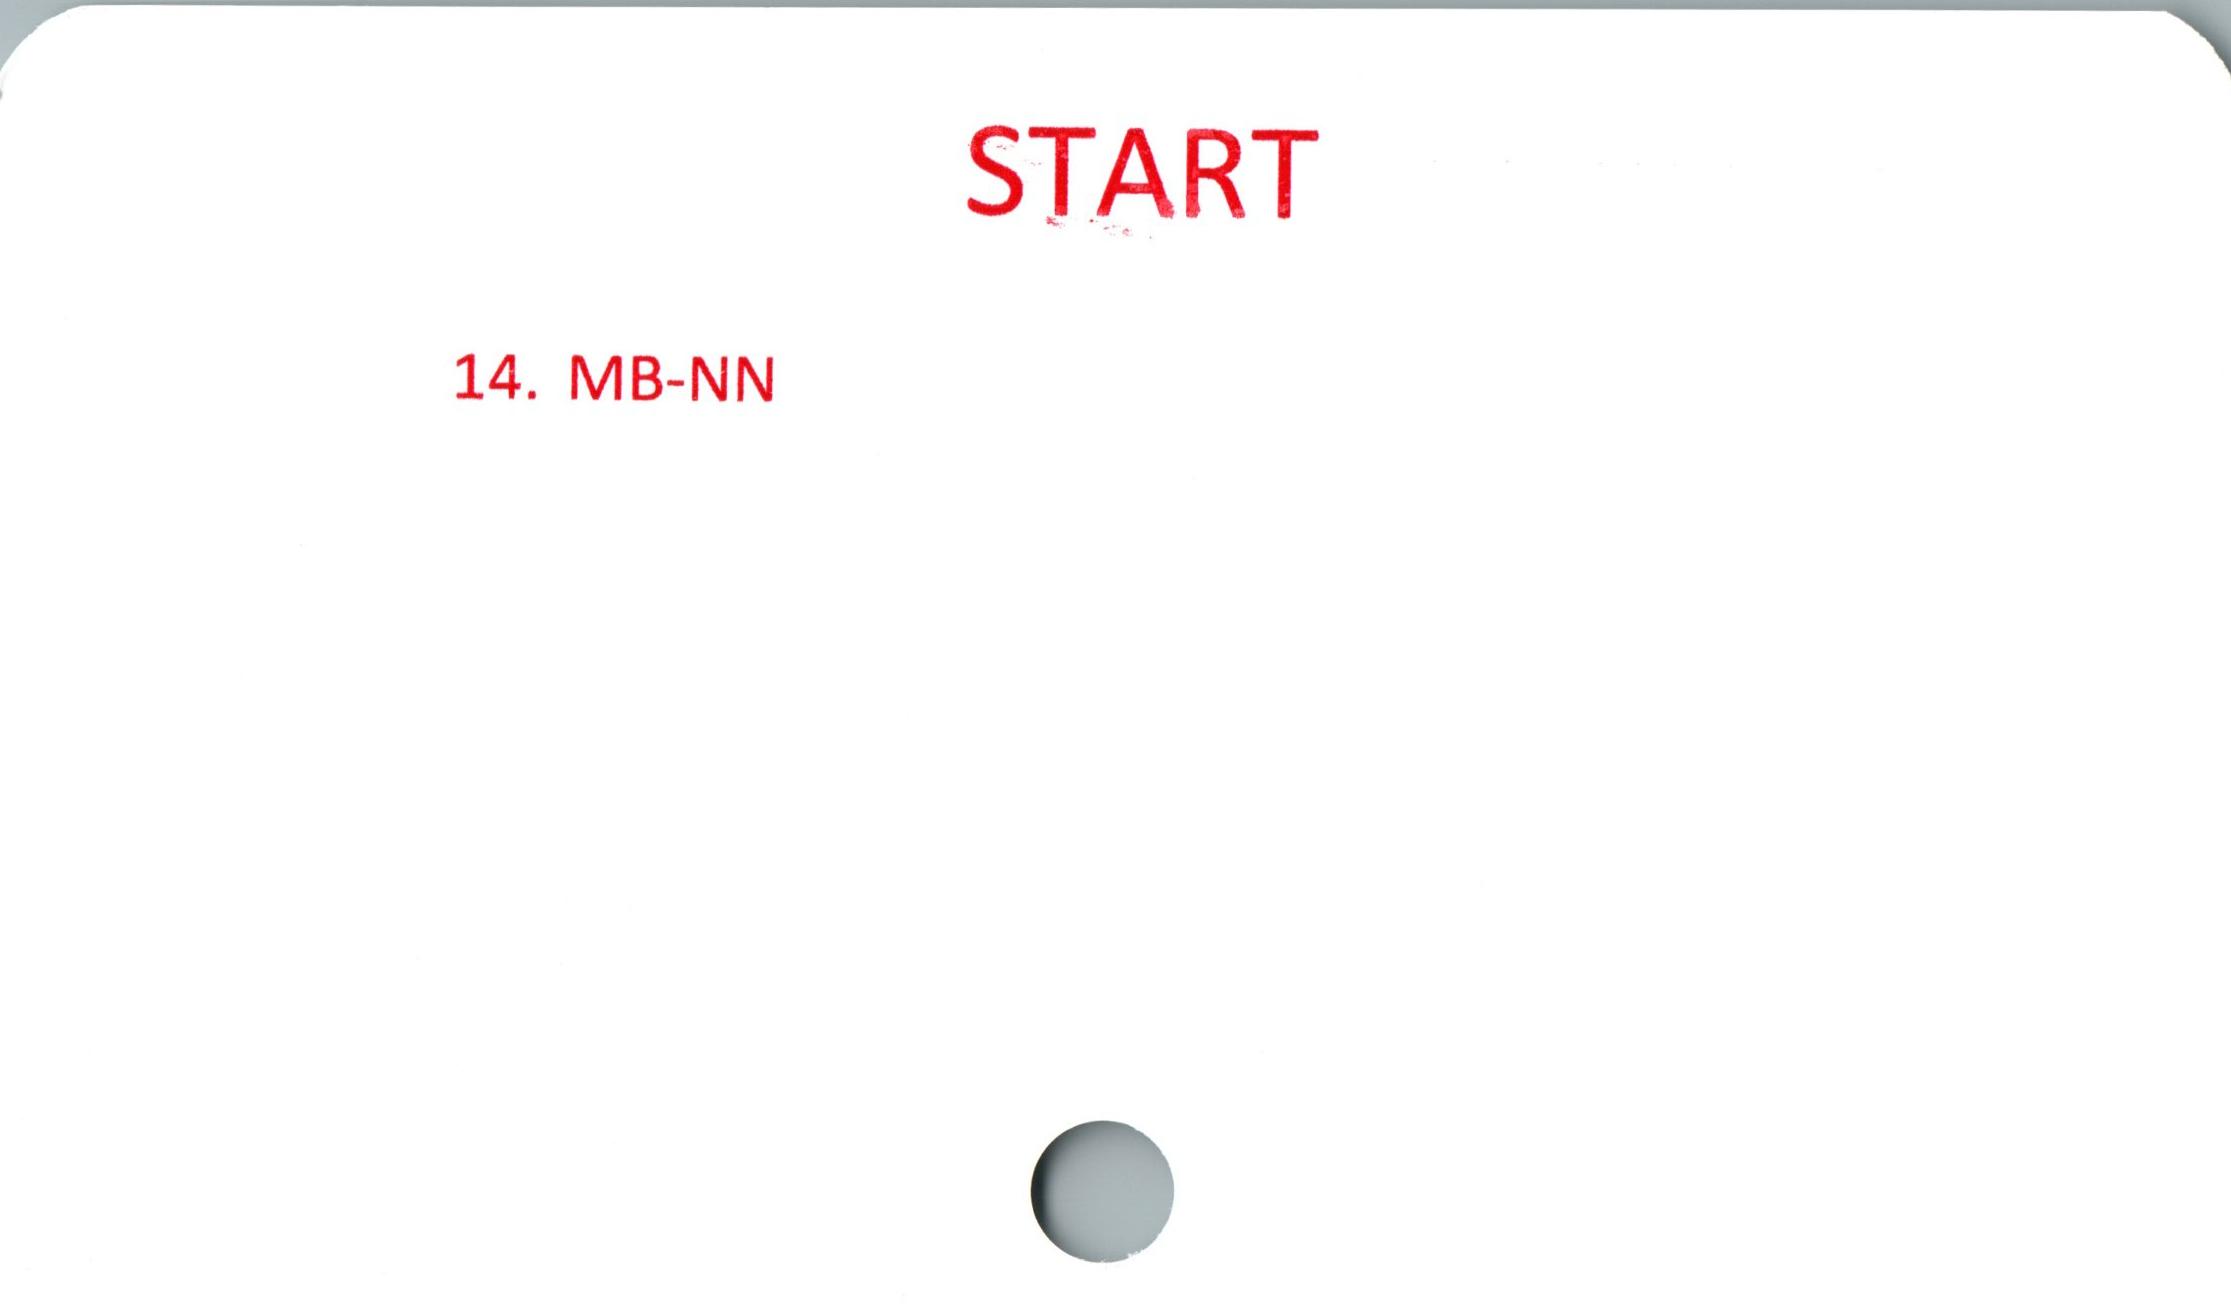 START 14. MB-NN ﻿START

14. MB-NN